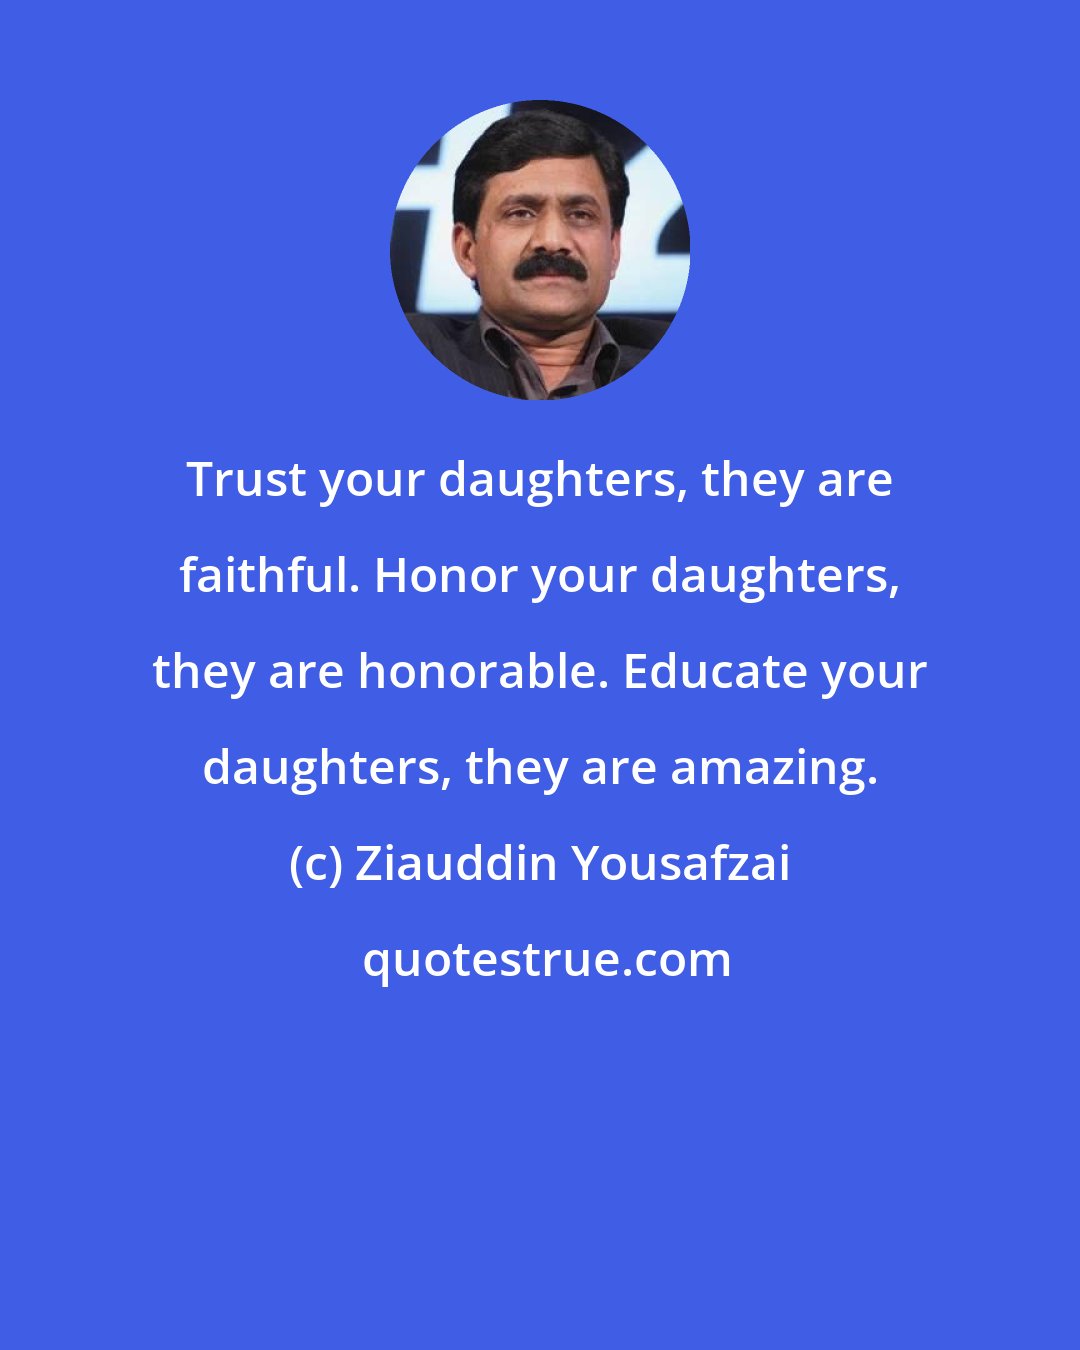 Ziauddin Yousafzai: Trust your daughters, they are faithful. Honor your daughters, they are honorable. Educate your daughters, they are amazing.